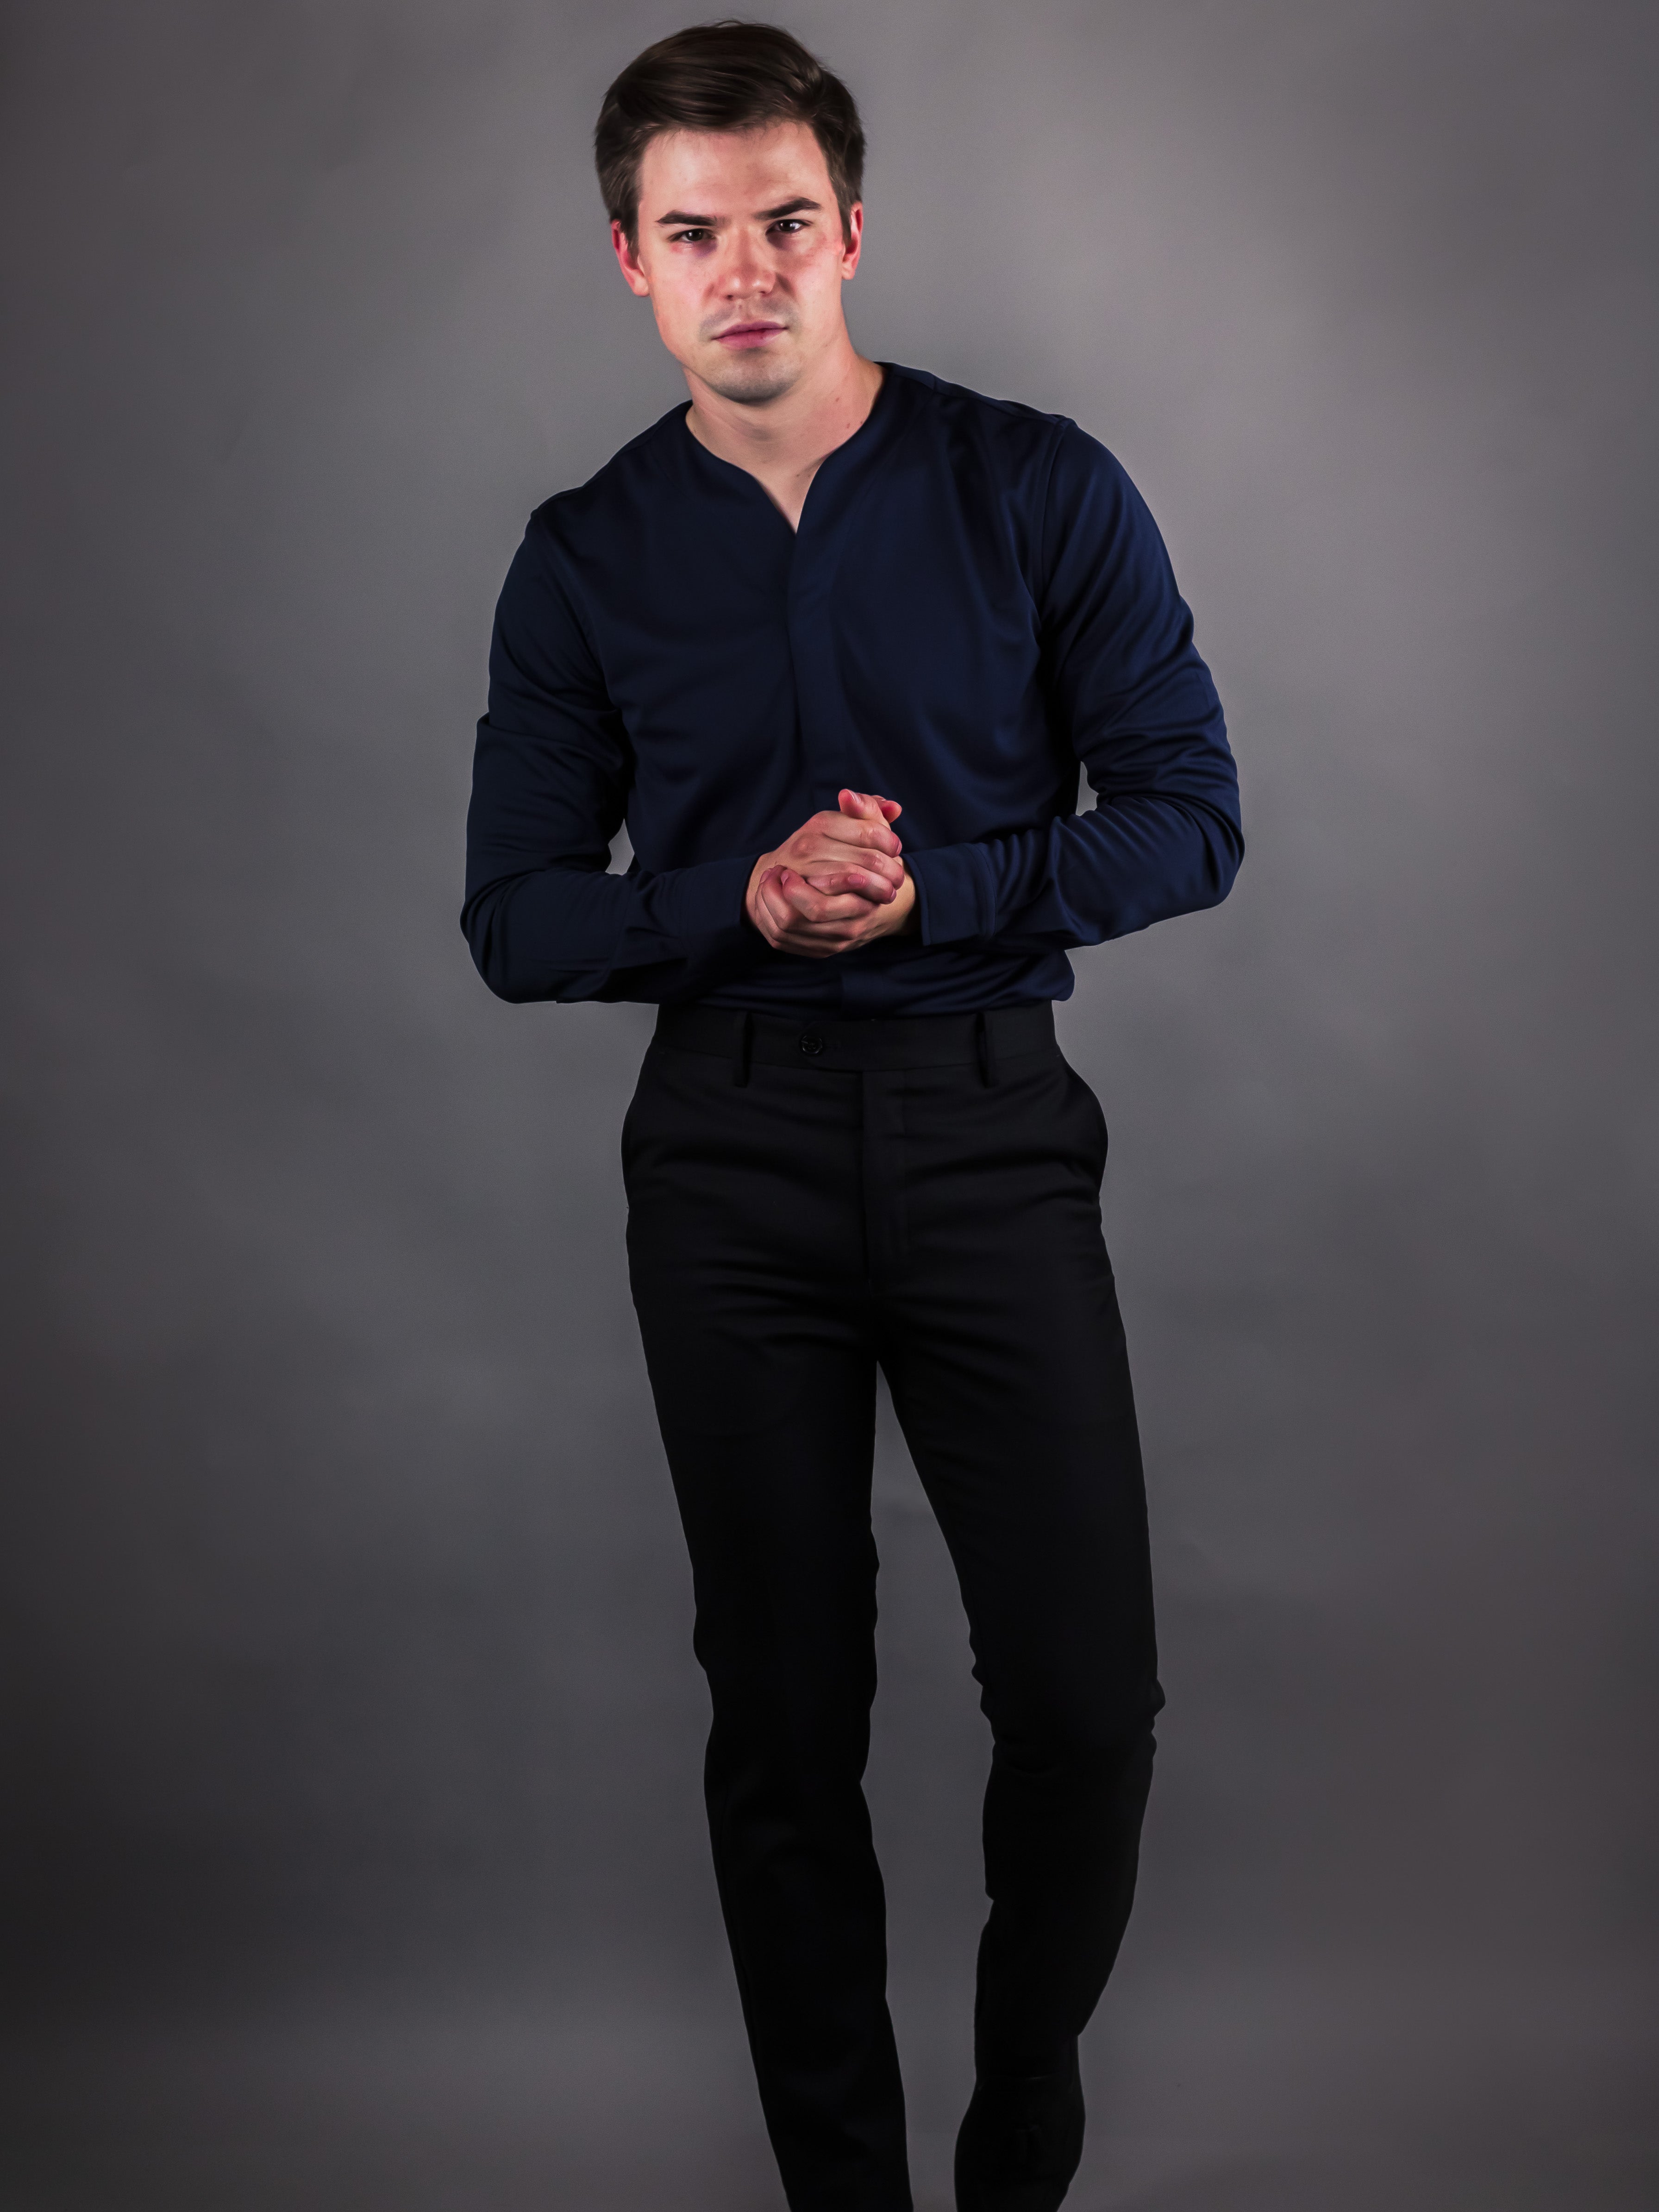 Muscular man wearing the new Long sleeve Cheegs shirt in dark blue